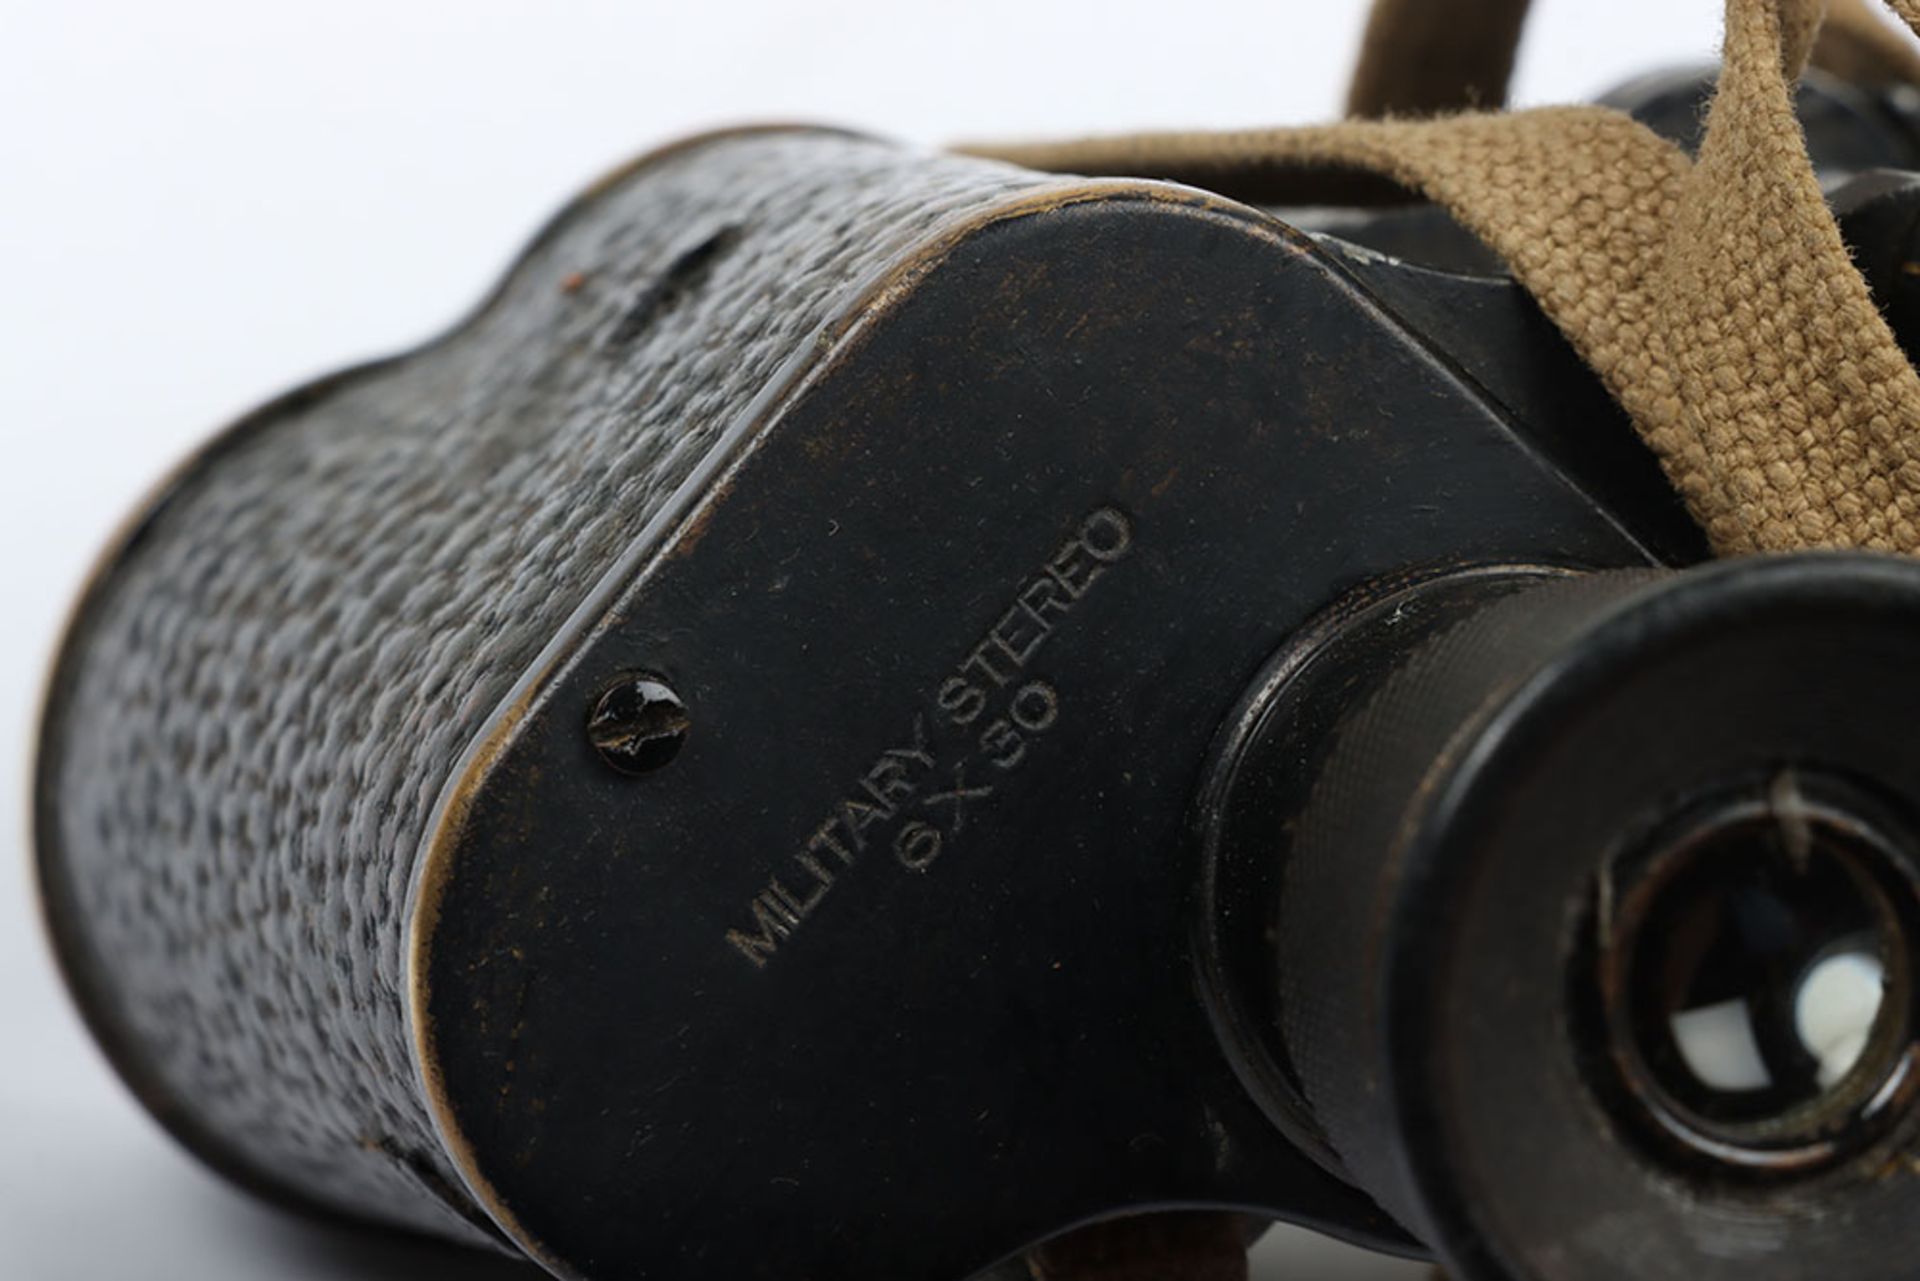 Pair of WW2 British Officers Binoculars in Webbing Carry Case - Image 7 of 10